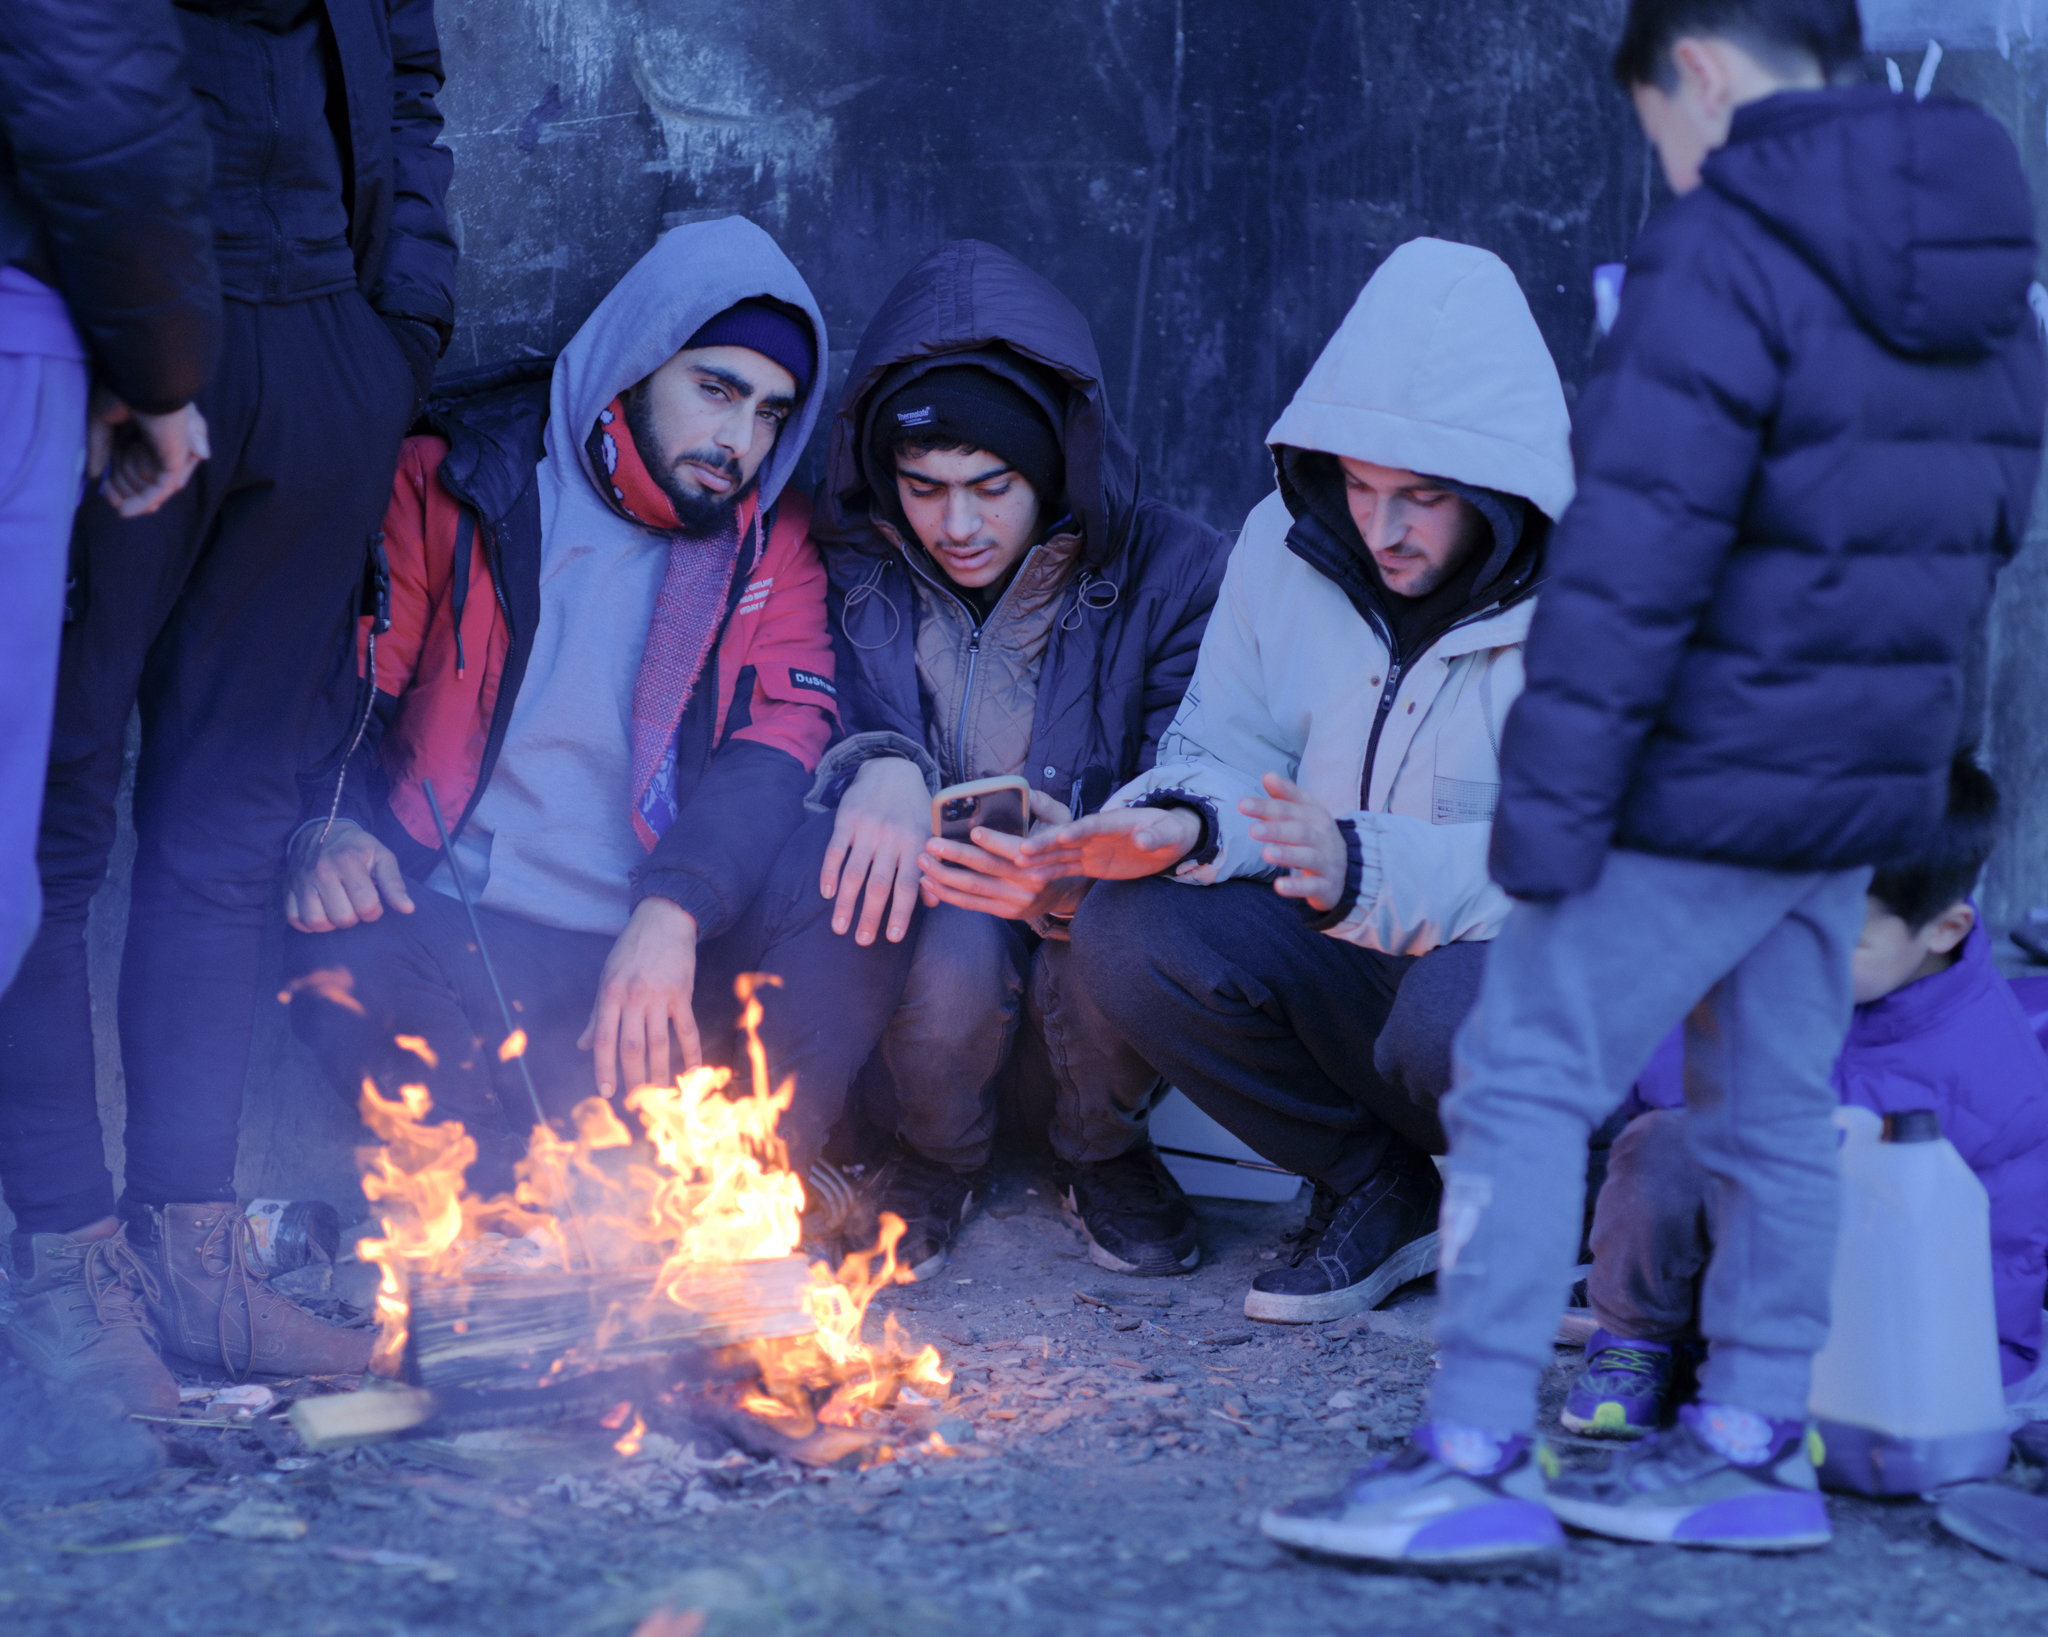 0SSA0399 シリア人移民との思い出【イギリス取材レポート-7】 シリア人移民との思い出【イギリス取材レポート-7】